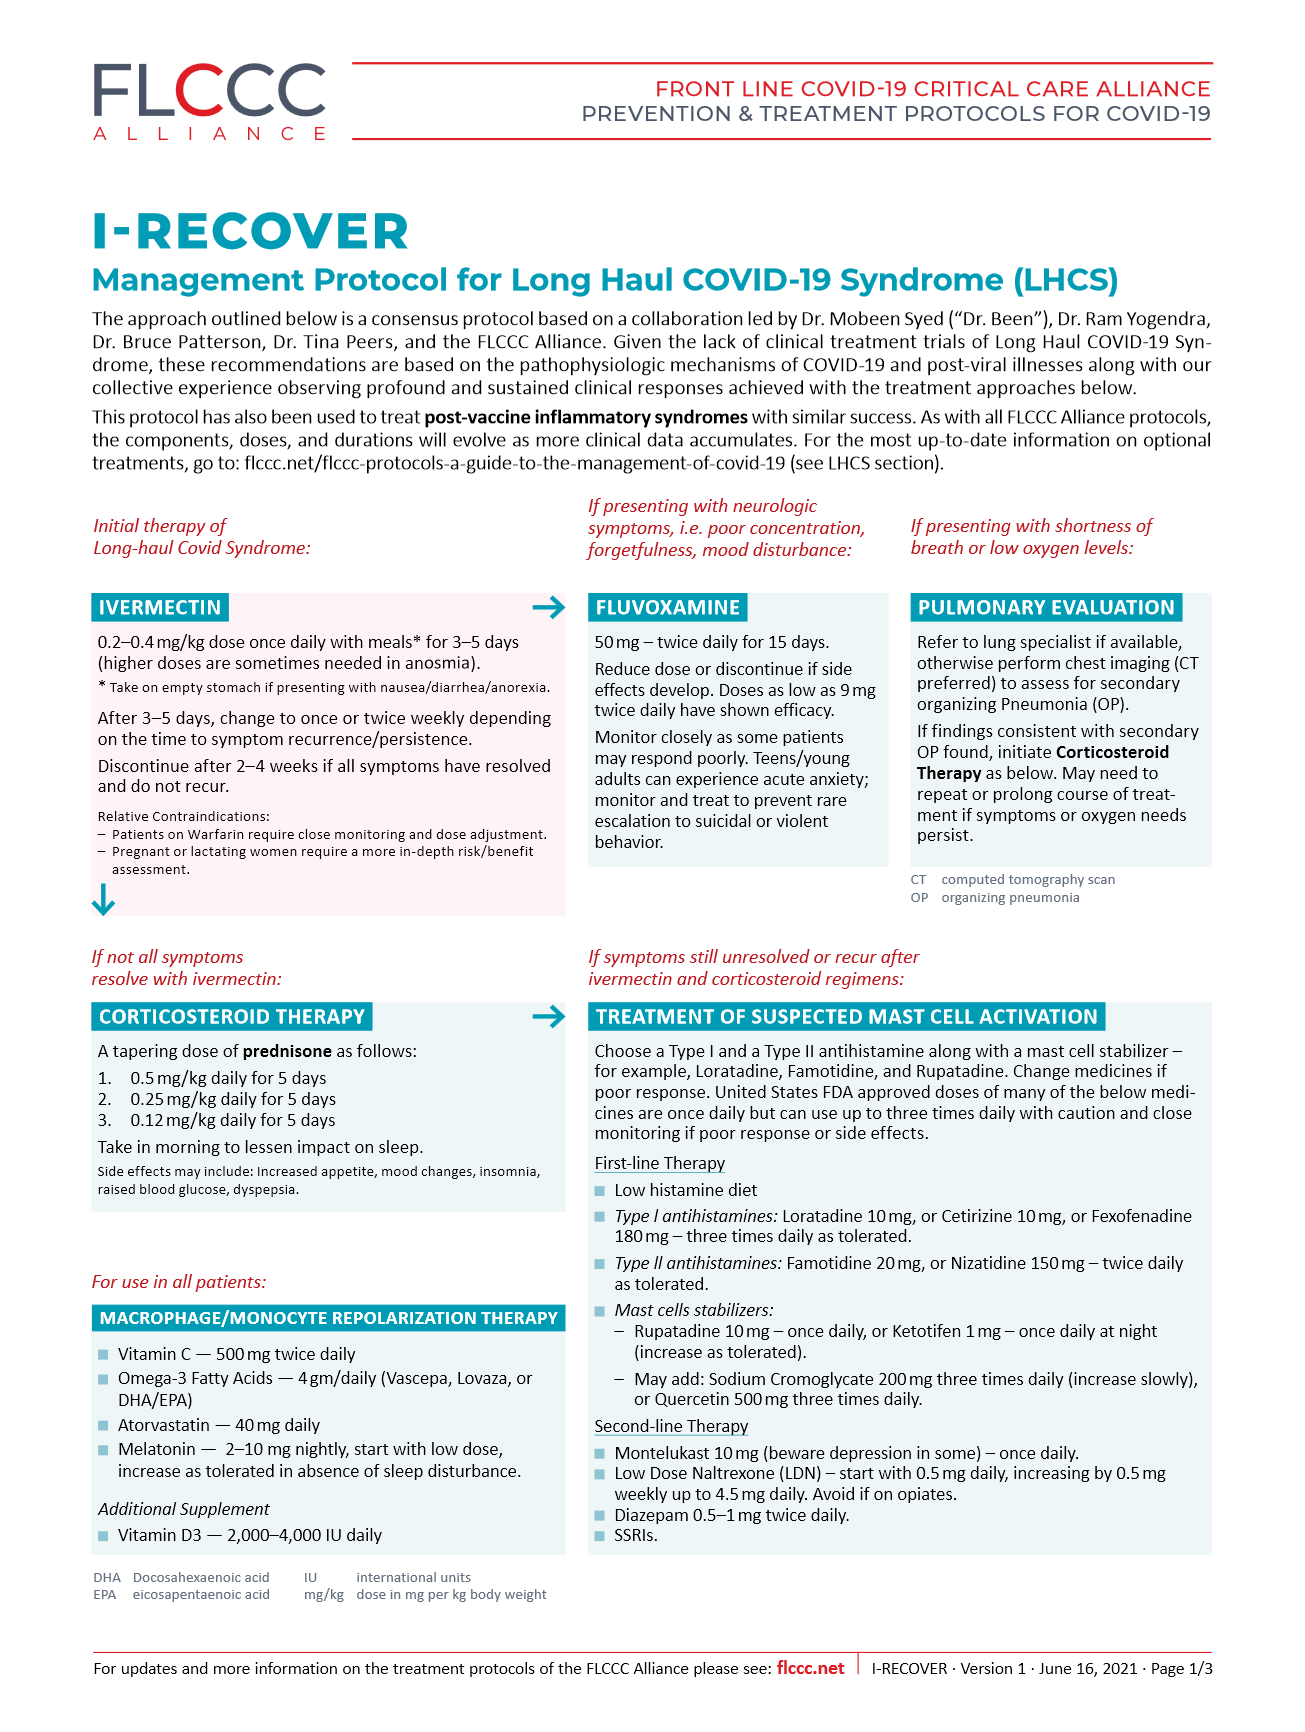 FLCCC Announces Treatment Protocol for Long Haul COVID19 Lyme